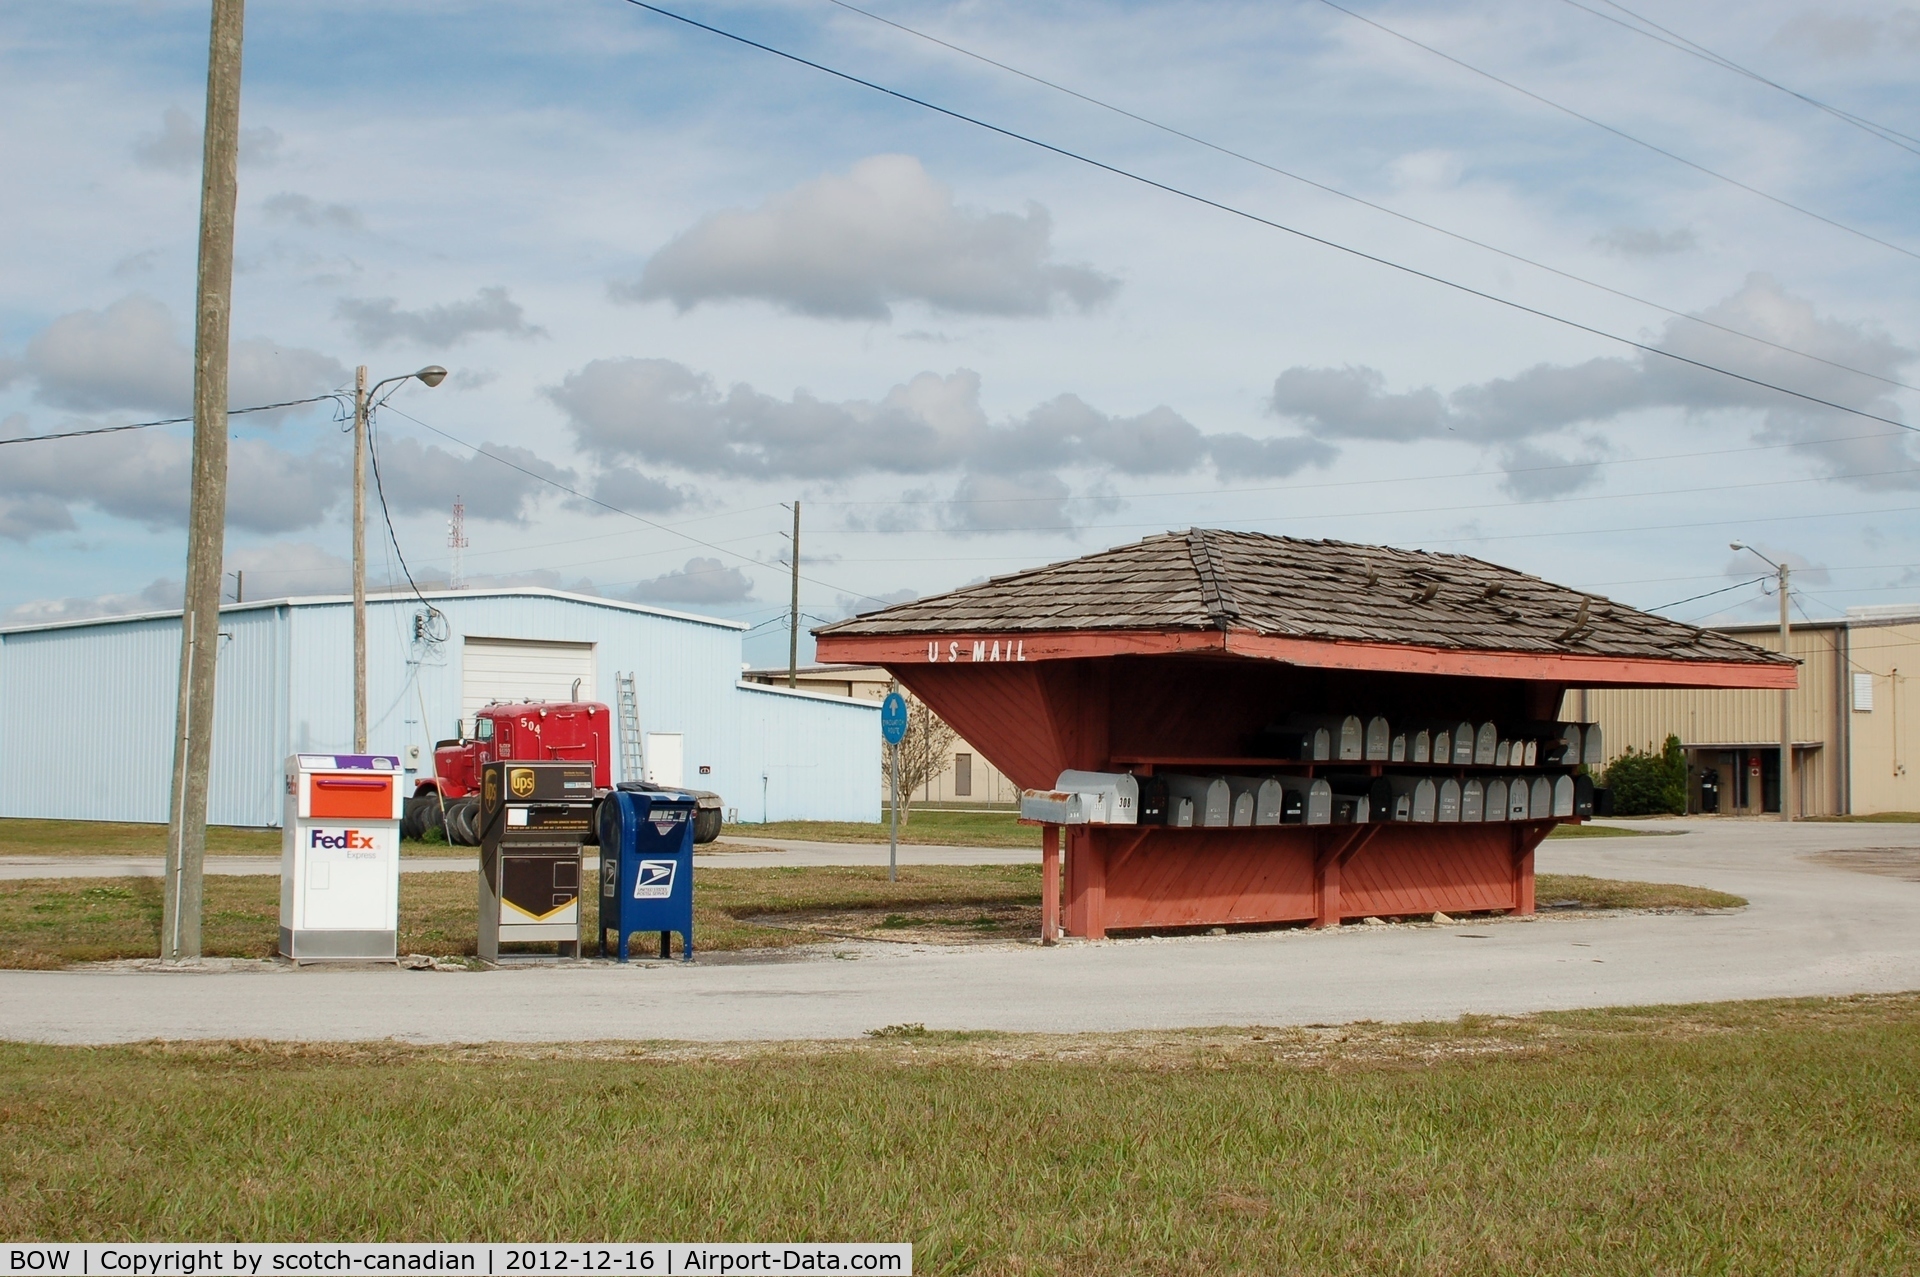 Bartow Municipal Airport (BOW) - Mail Box area at Bartow Municipal Airport, Bartow, FL  